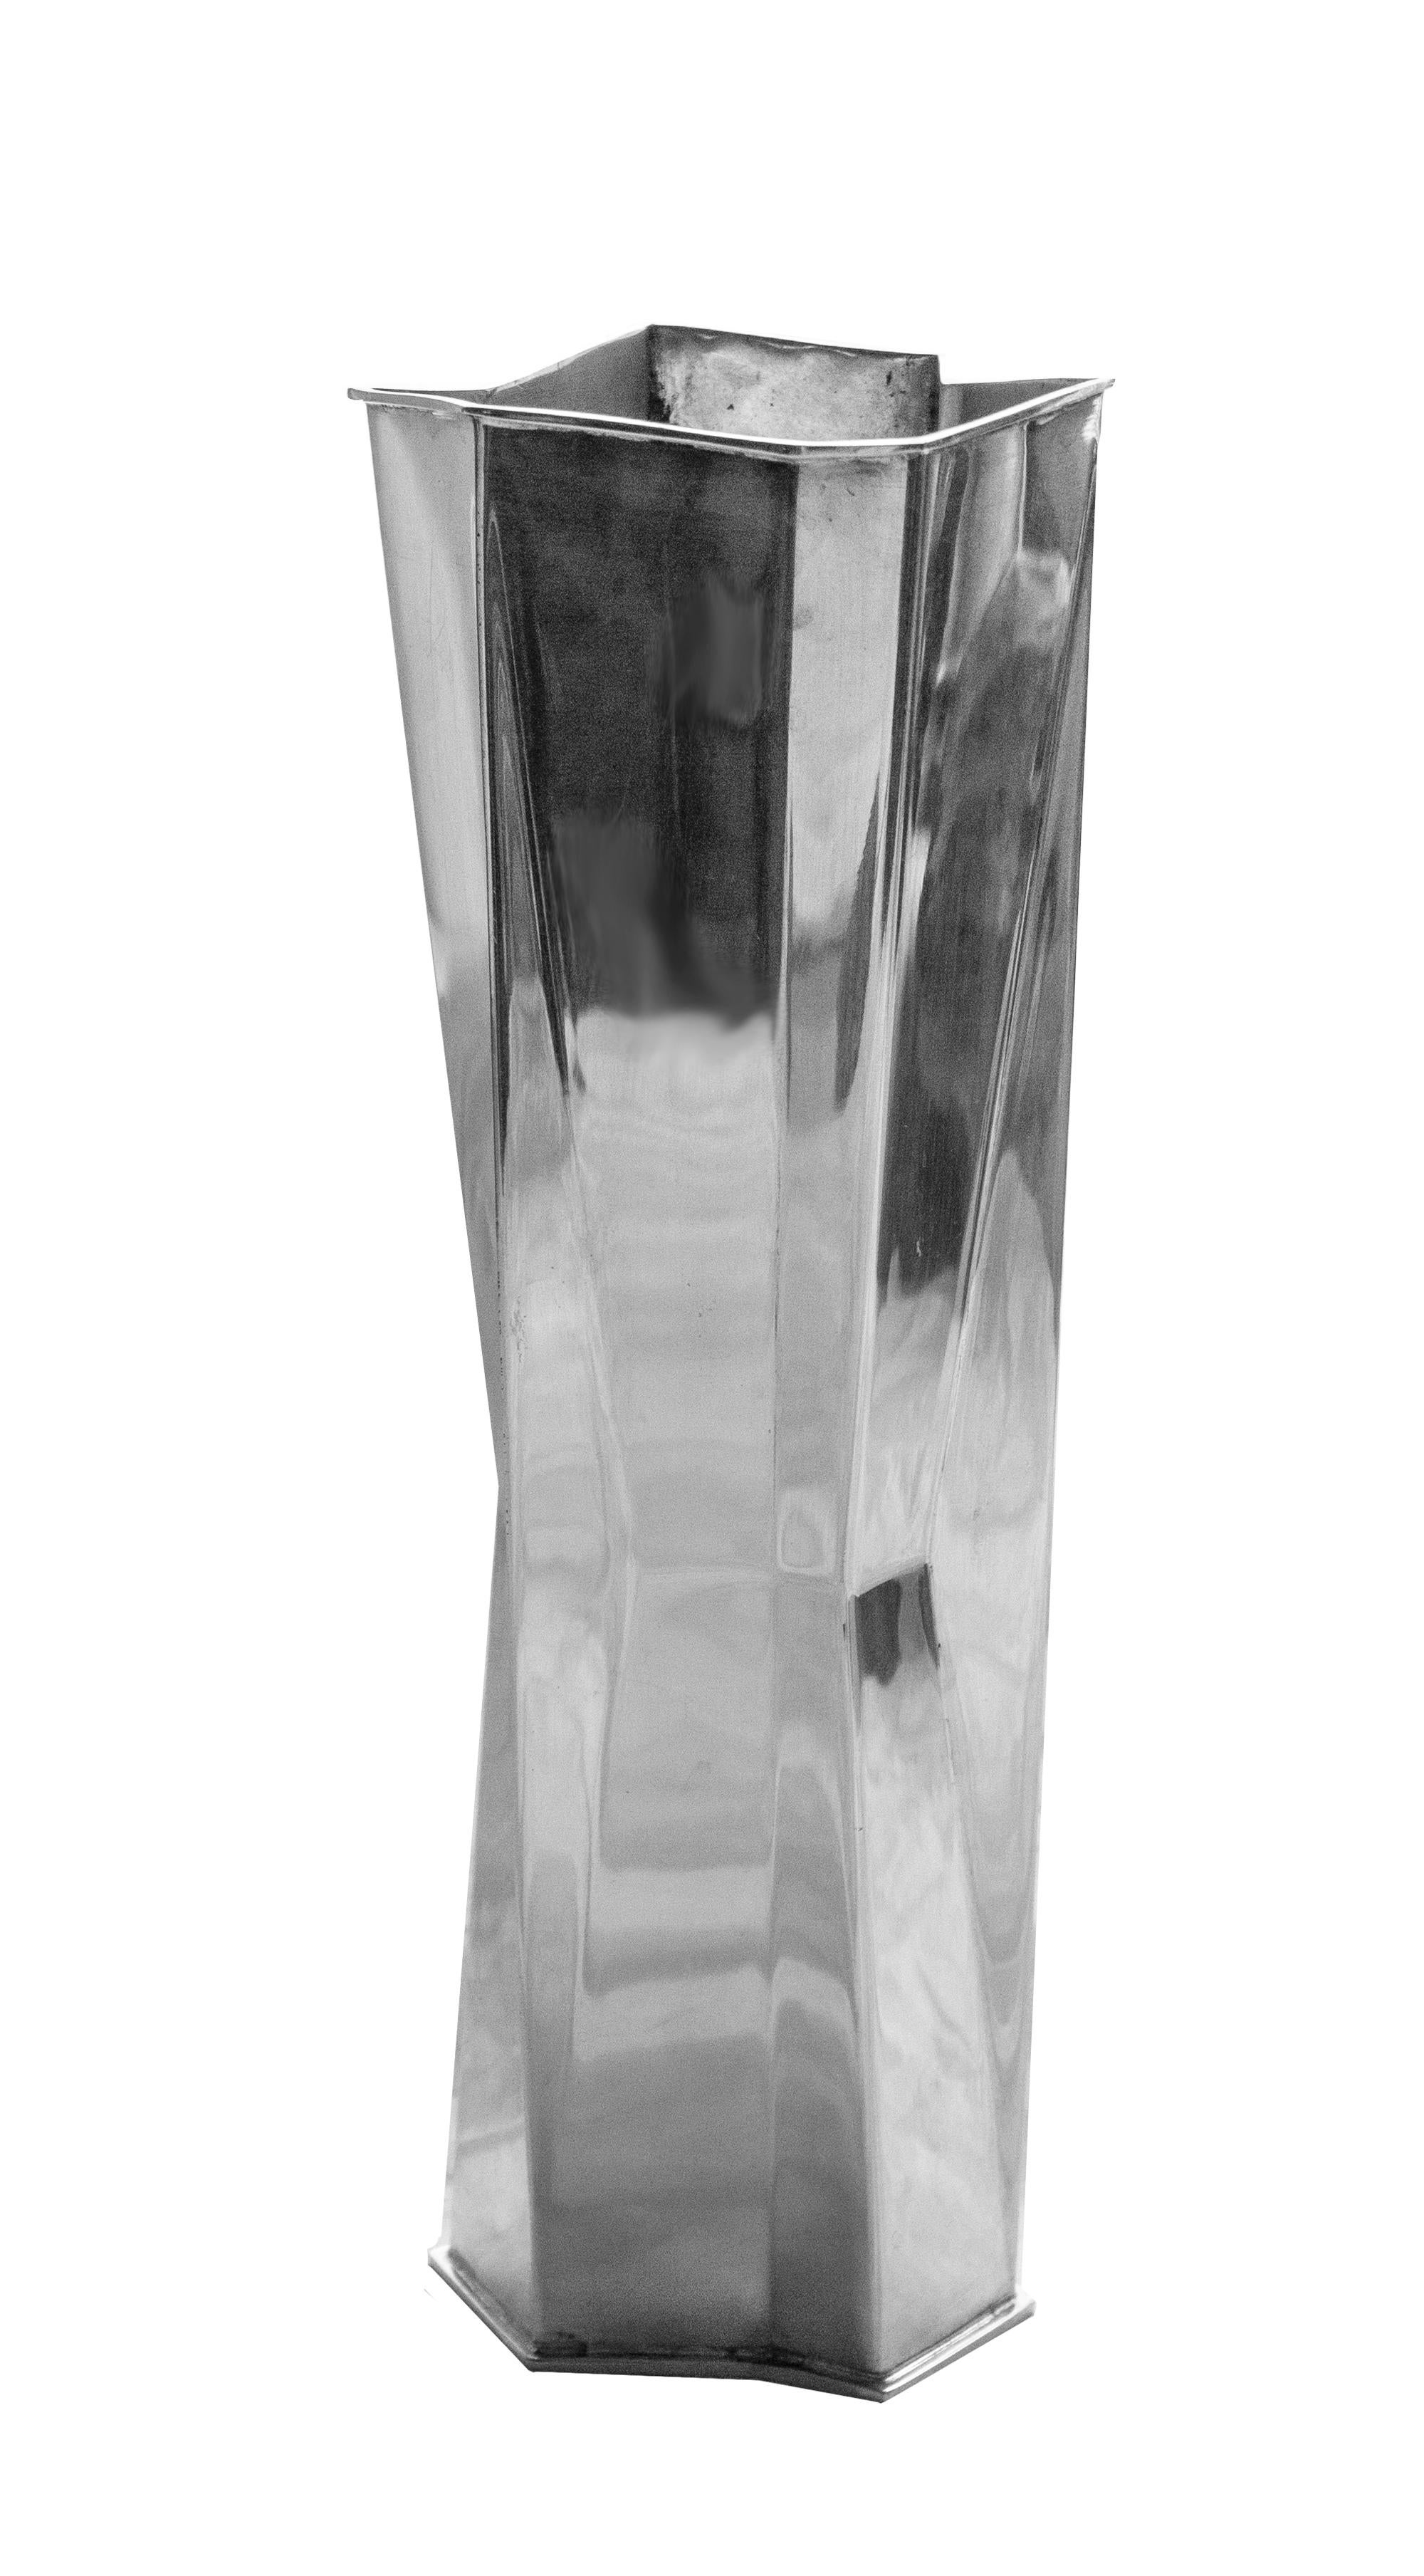 Vase designed by the great artist Tapio Wirkkala, Kultakeskus OY, Hämeenlinna, Finland, 1973. Made in sterling silver. Irregular shape. Stamped, monogram signed. Swedish import stamped. Surface wear. Weight 352 g.